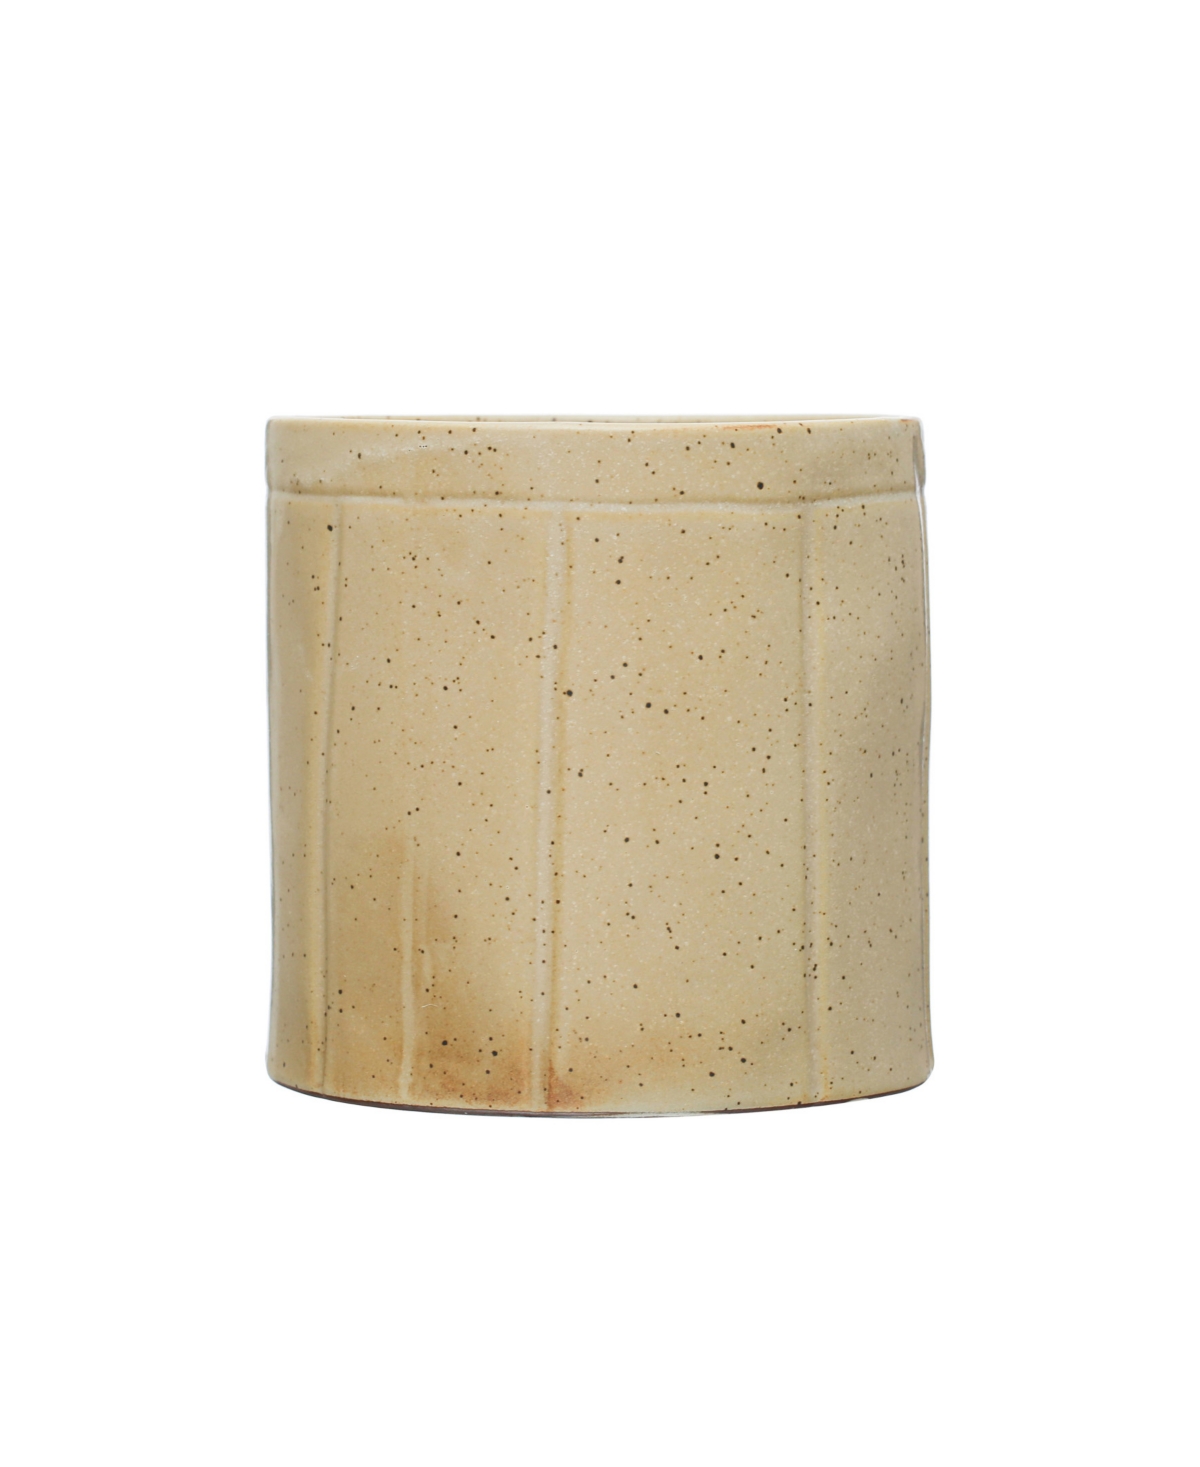 Decorative Stoneware Crock with Line Detail - Tan